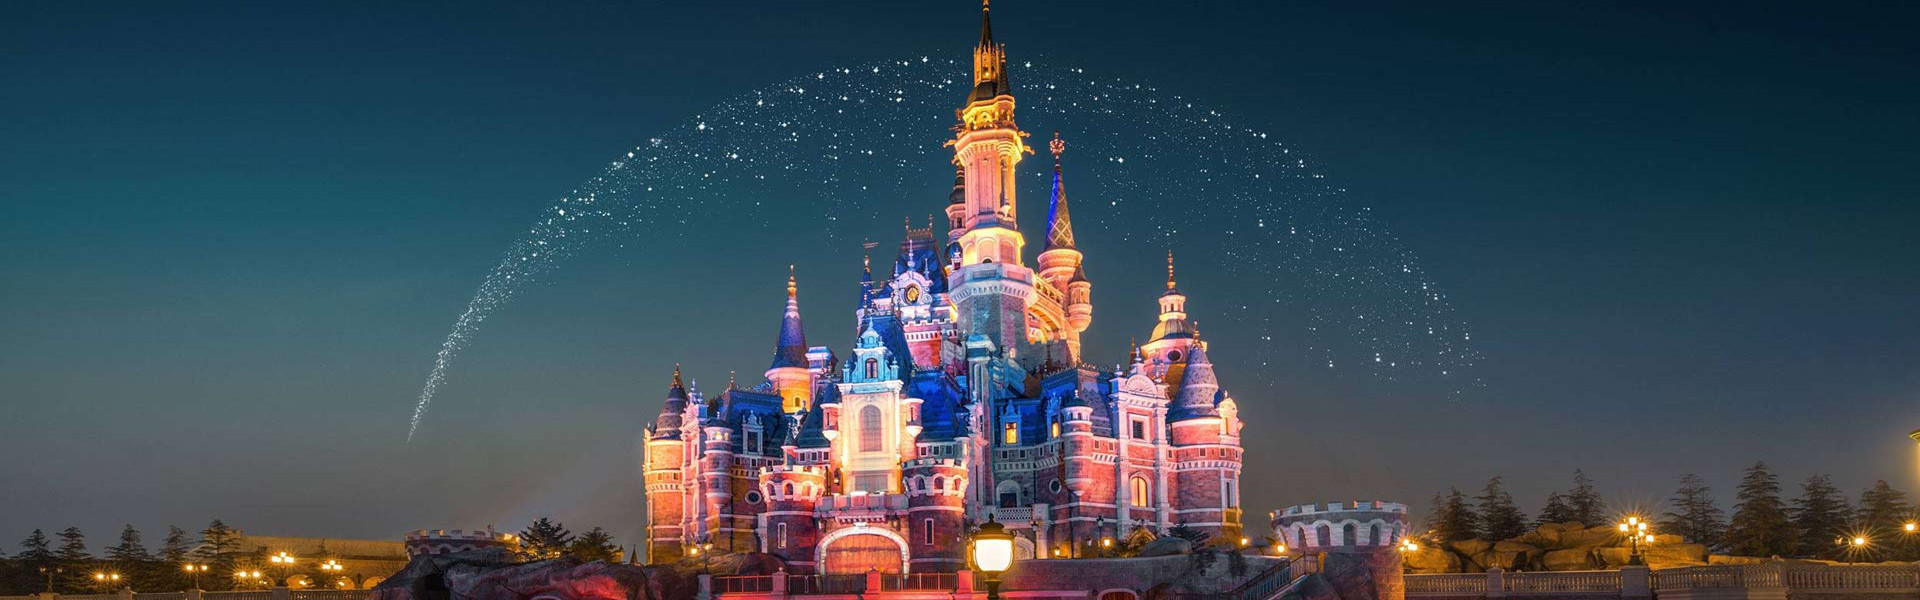 Shanghai Disney Resort (1-2 Days Ticket)